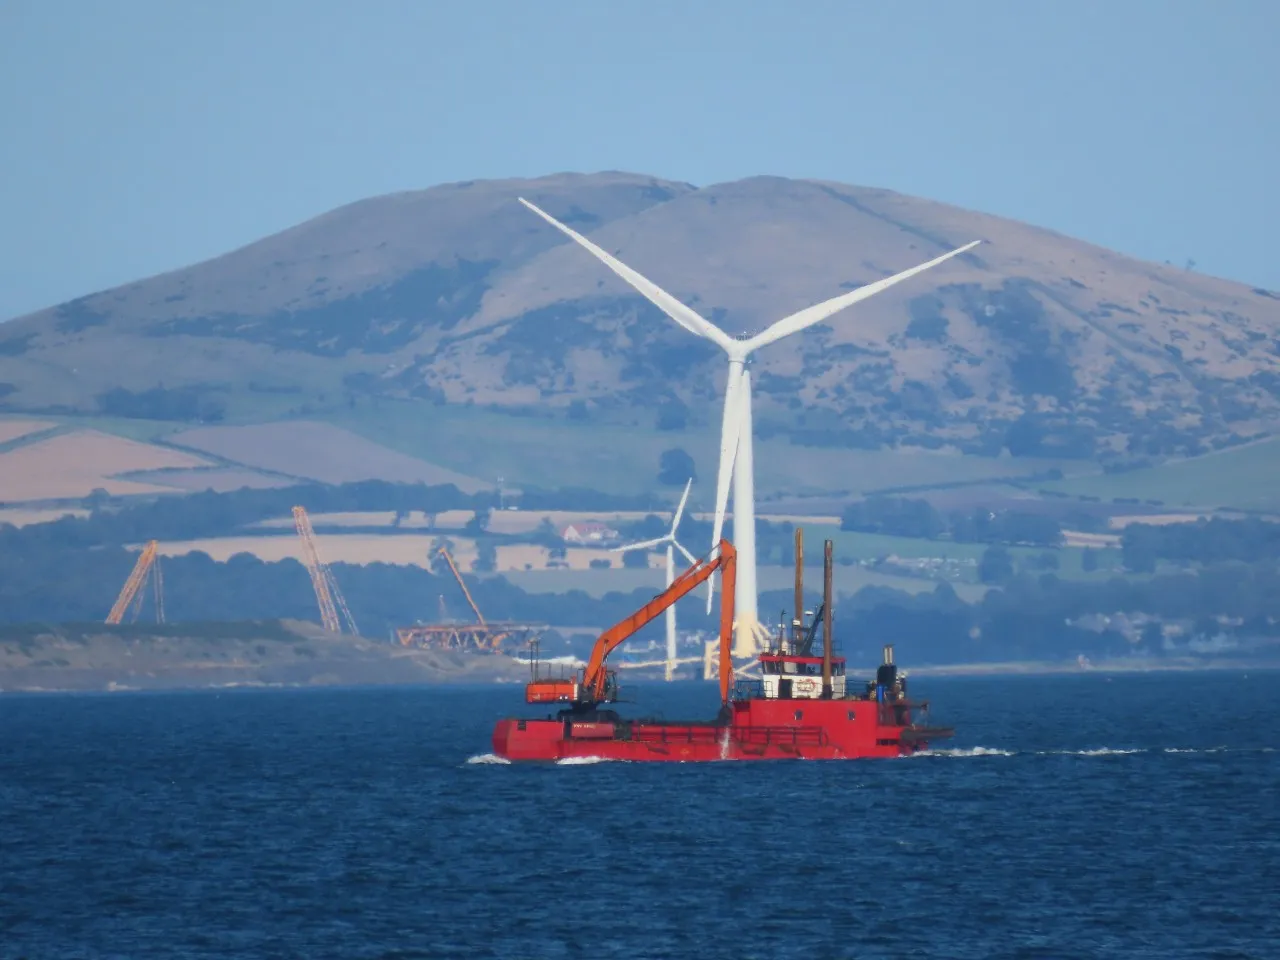 kirkcaldy wind turbines and water crane.jpg